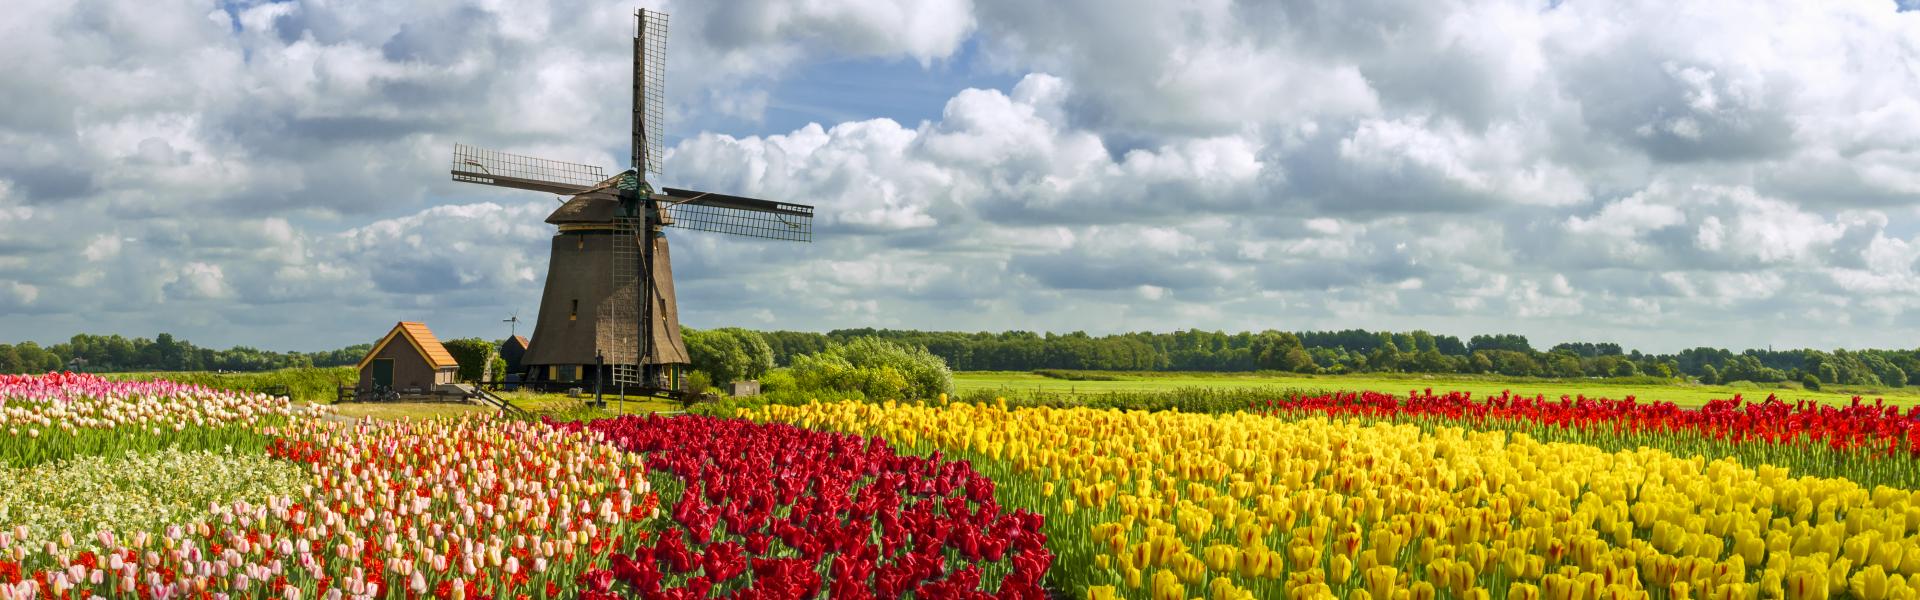 Location de vacances, Pays-Bas - Vacances.com